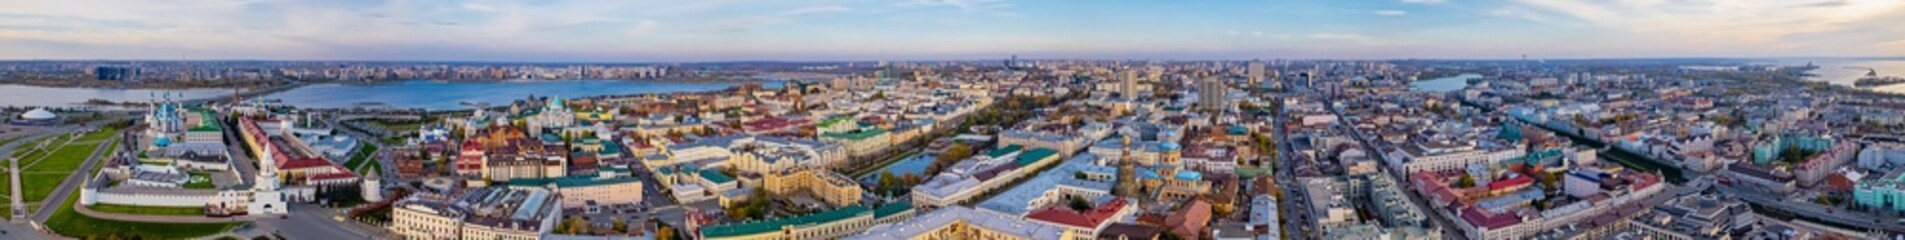 Panoramic view of the center of Kazan. Cityscape with the Kazanka River. An unusual view of Kazan...